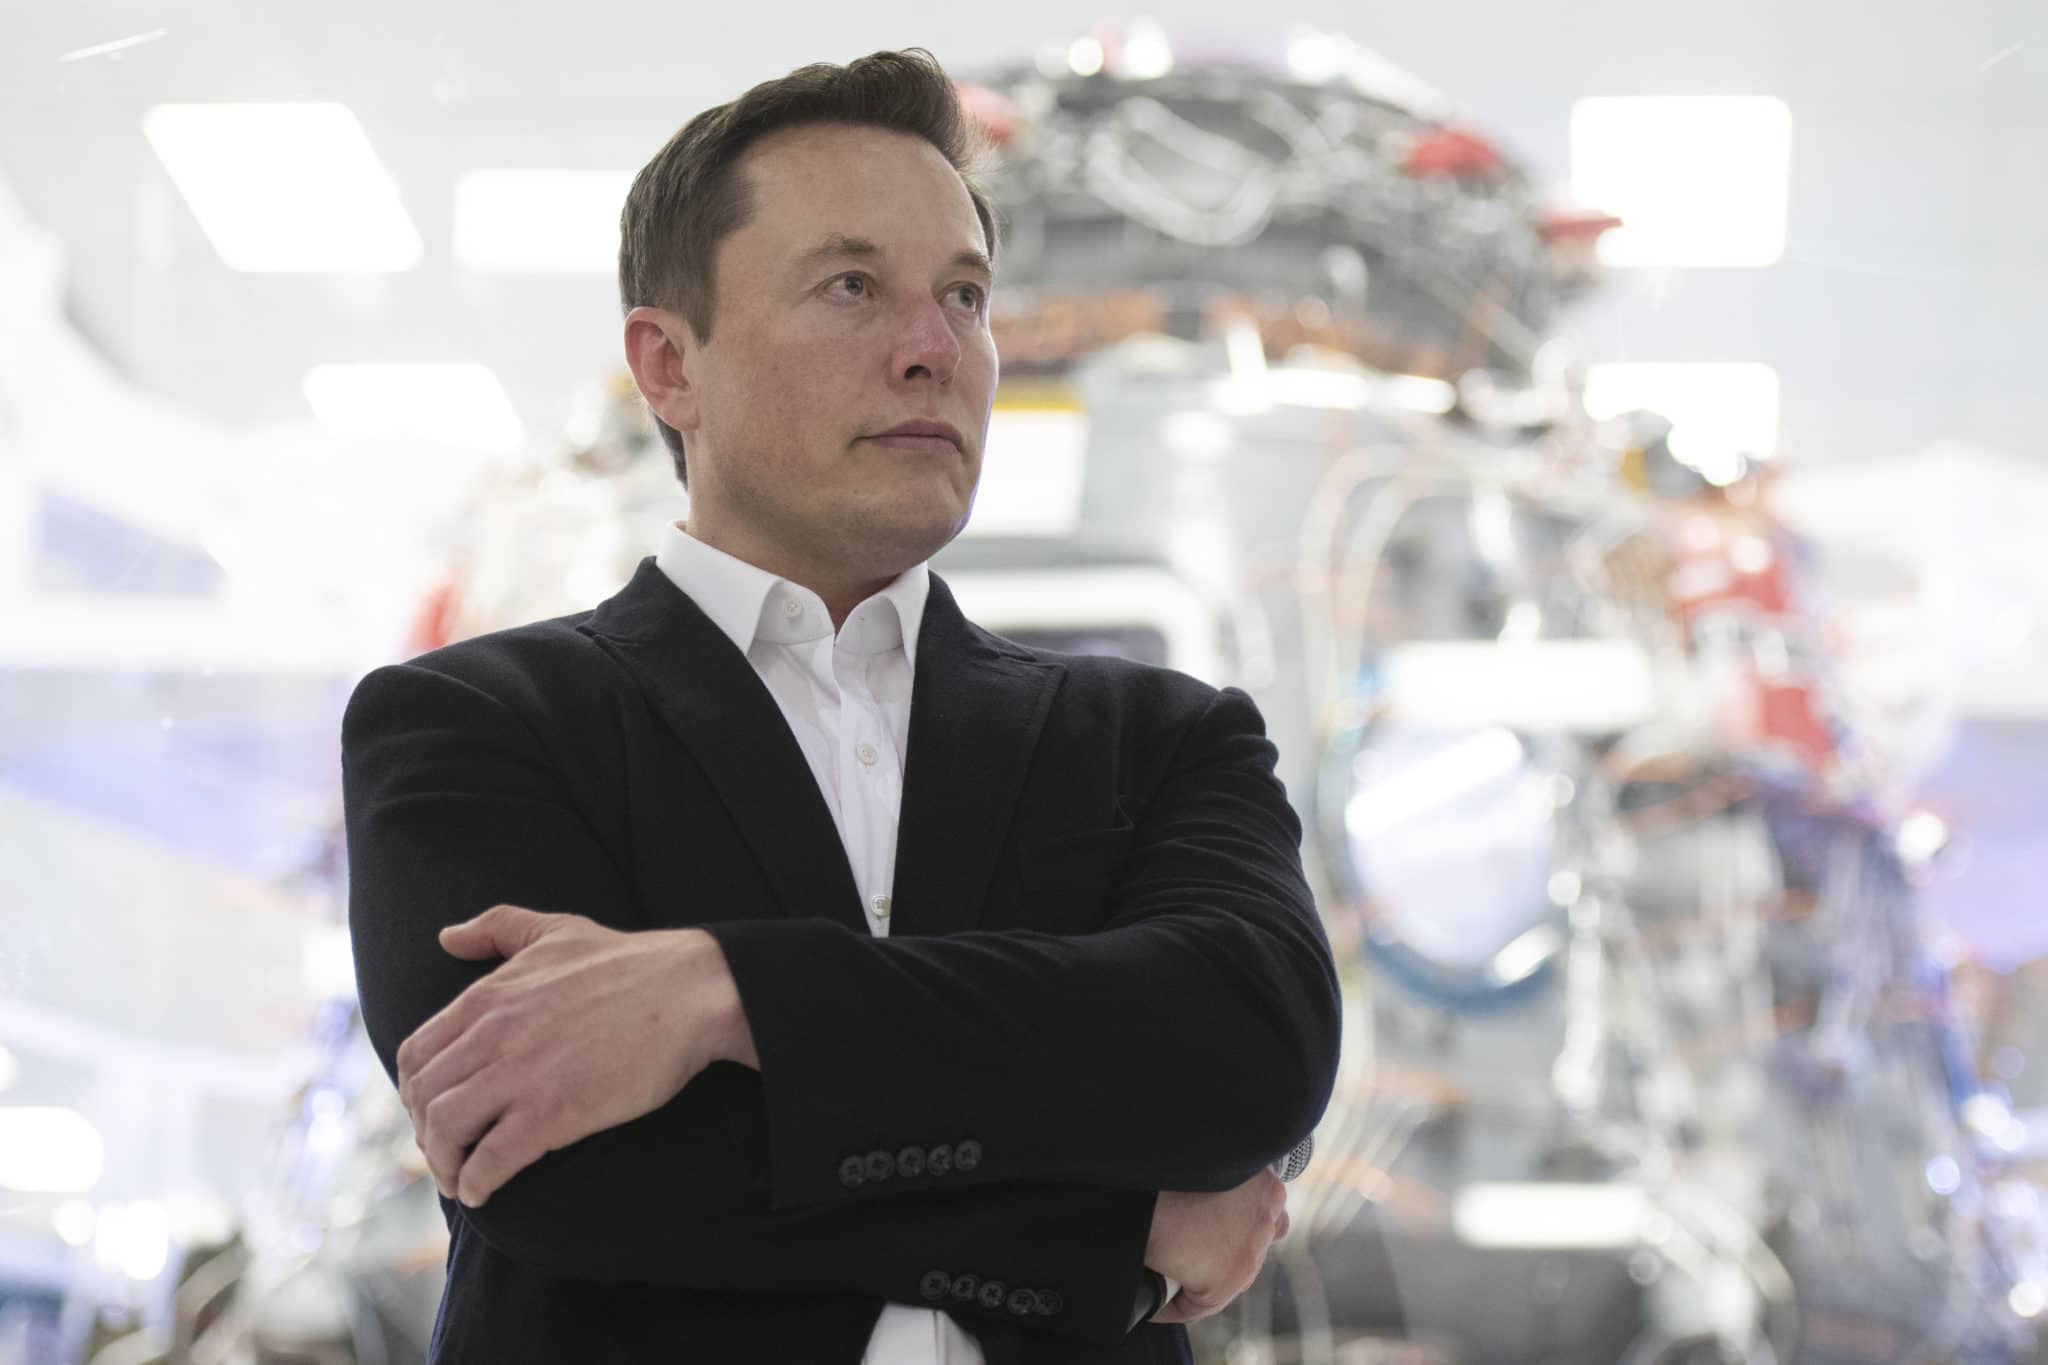 South African born Elon Musk’s net worth tops $100 billion: Forbes